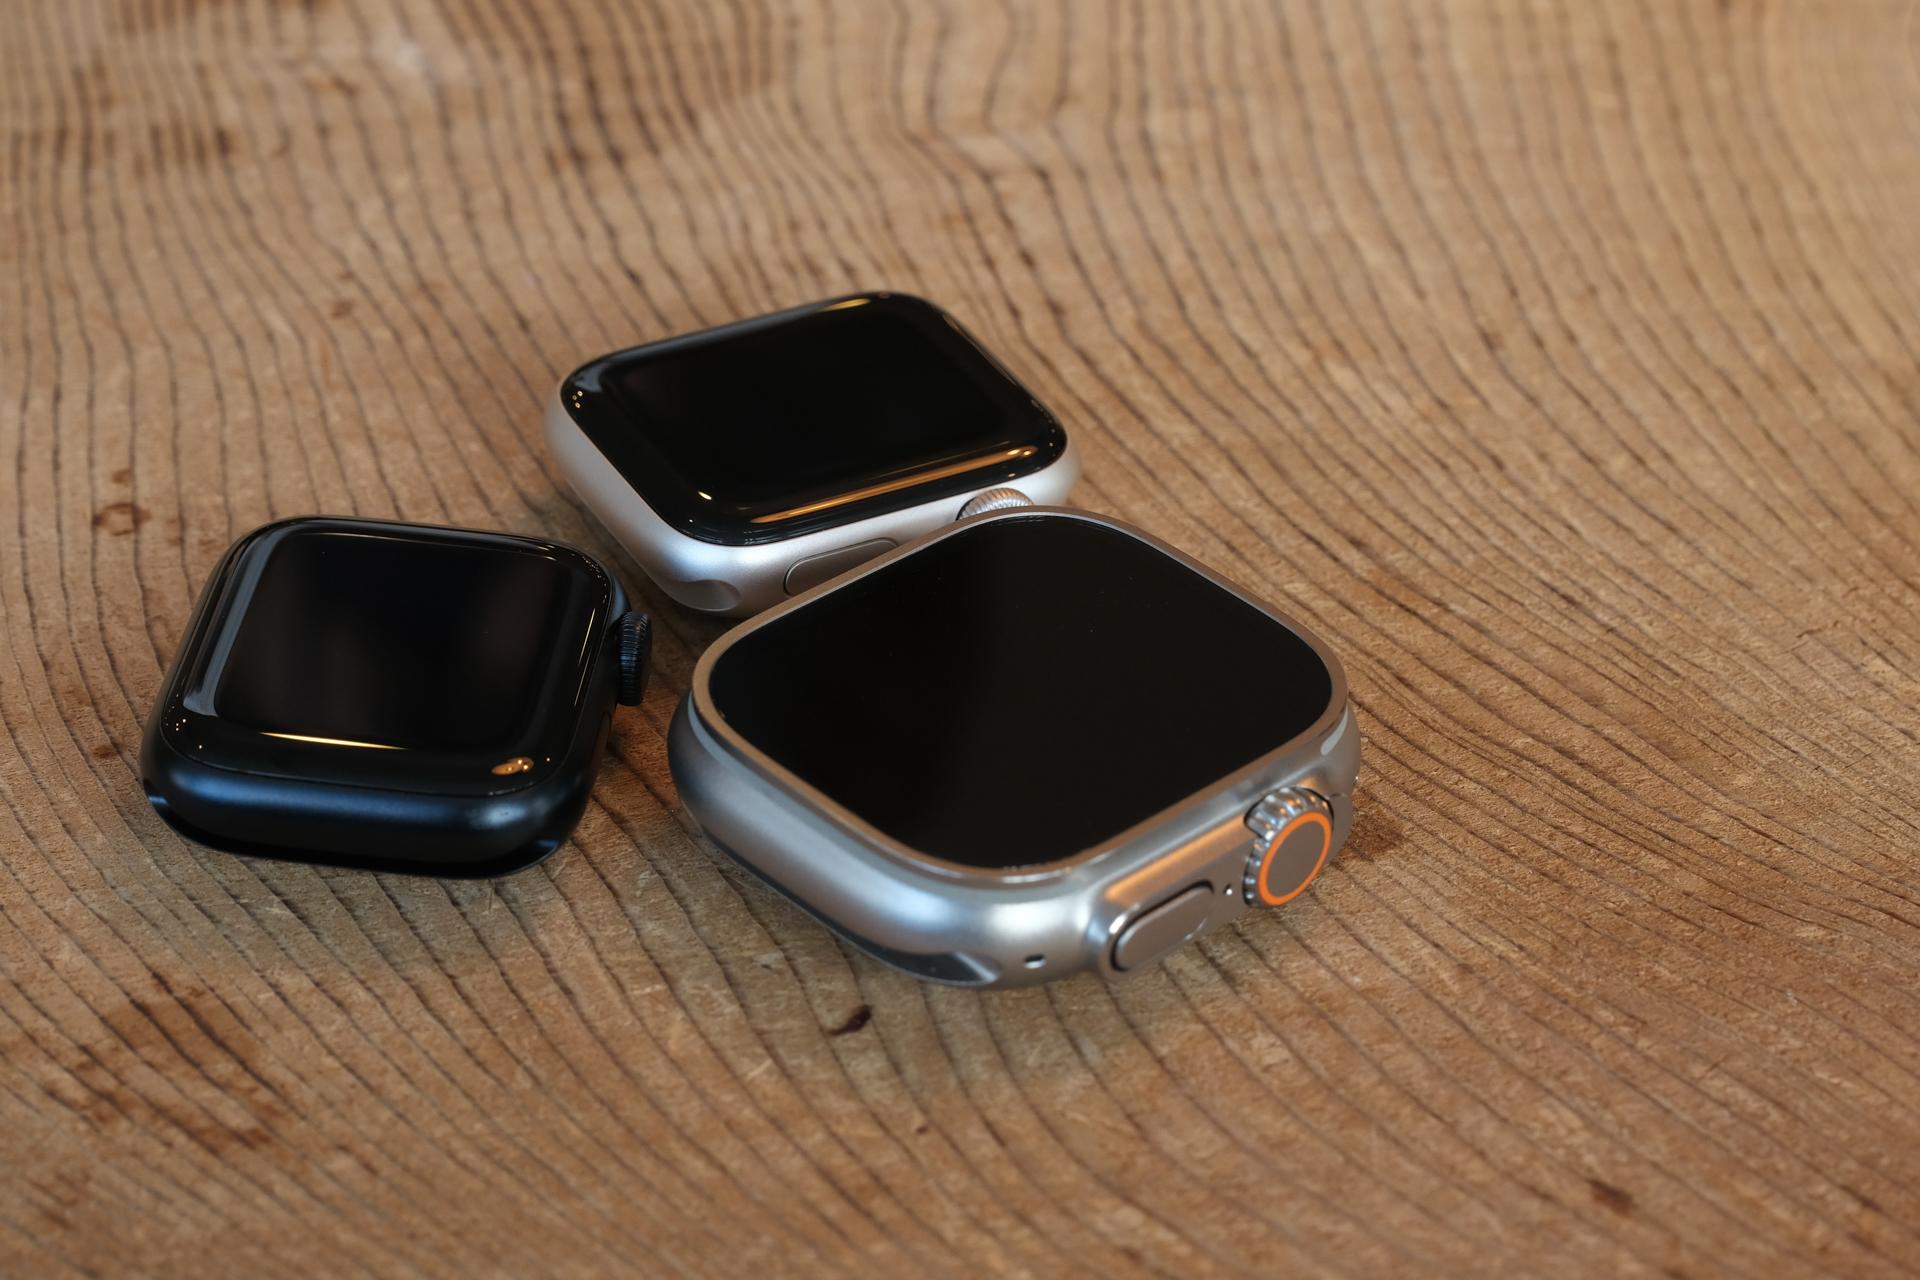 Series 8・SE2・Ultra、今年のApple Watchは3モデル。外観の